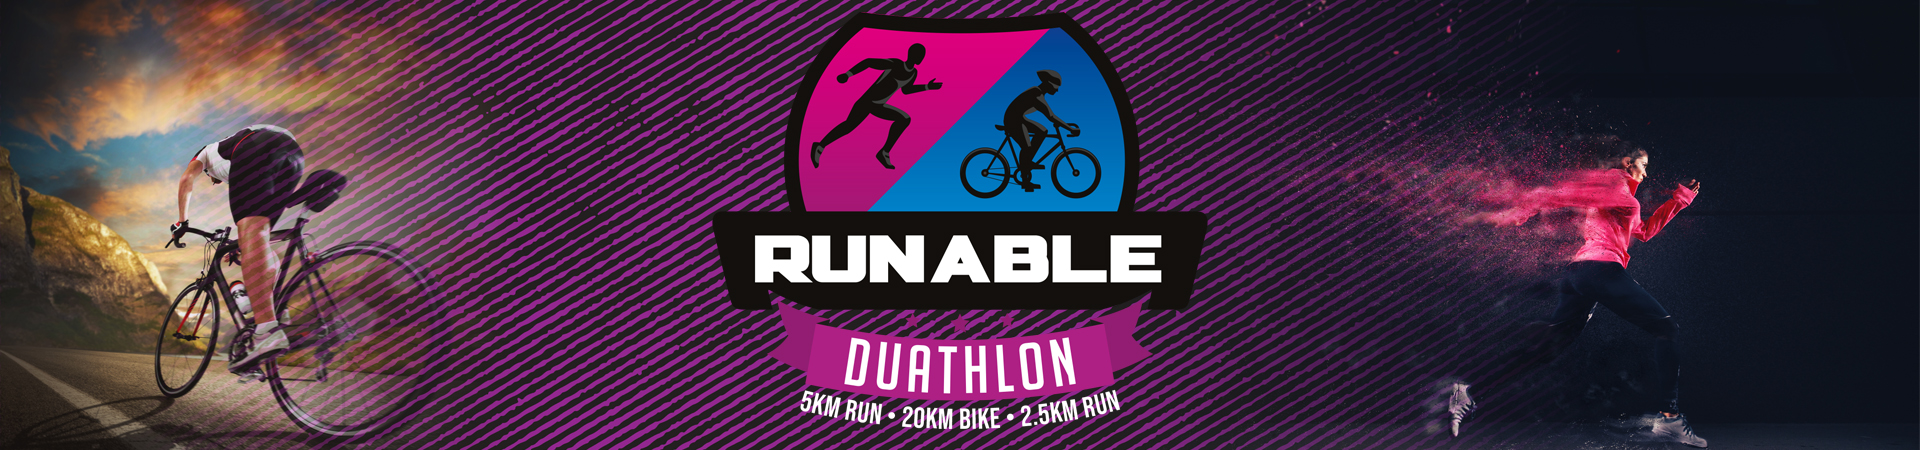 The RunAble Duathlon